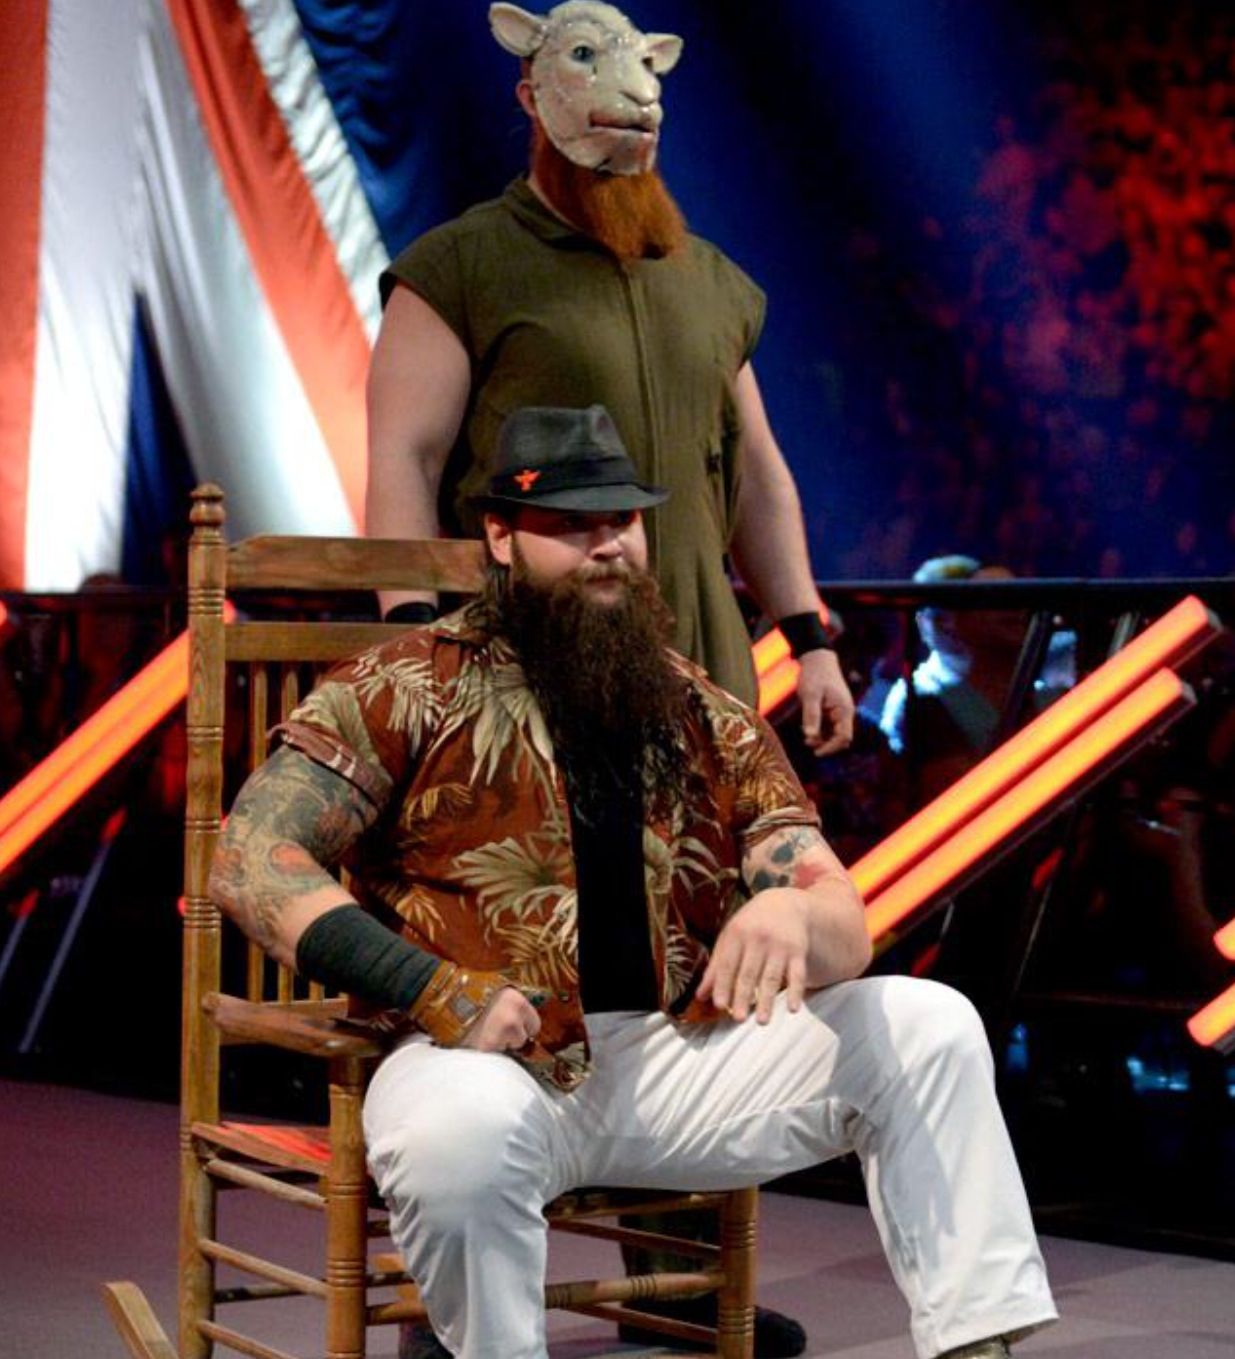 WWE Bray Wyatt & Erick Rowan. Wwe bray wyatt, The wyatt family, Erick rowan